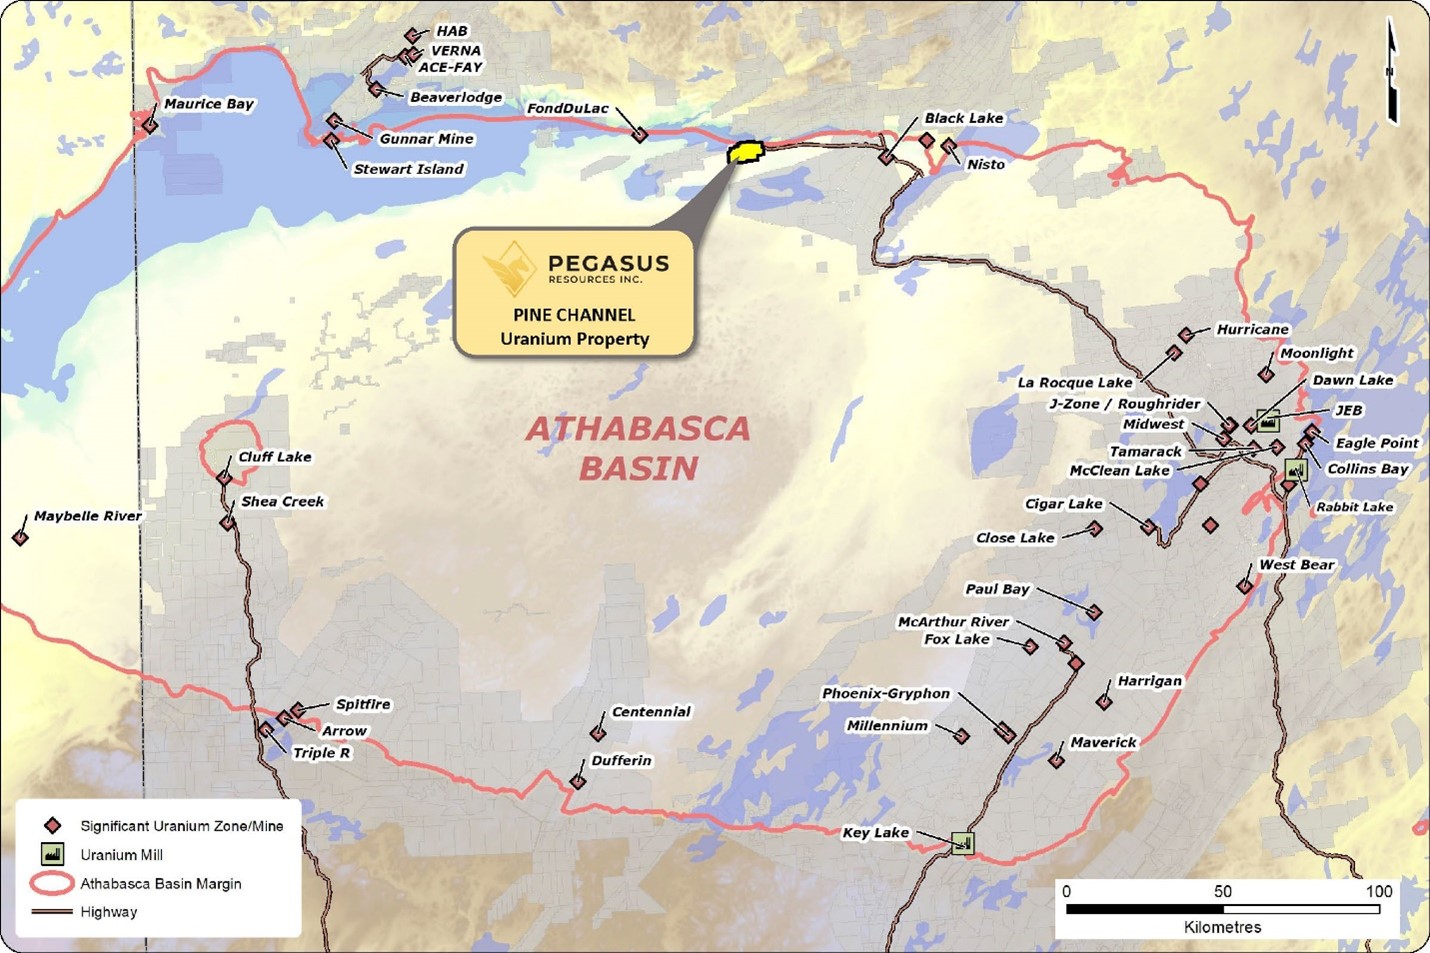 Pine Channel Uranium Property – Athabasca Basin